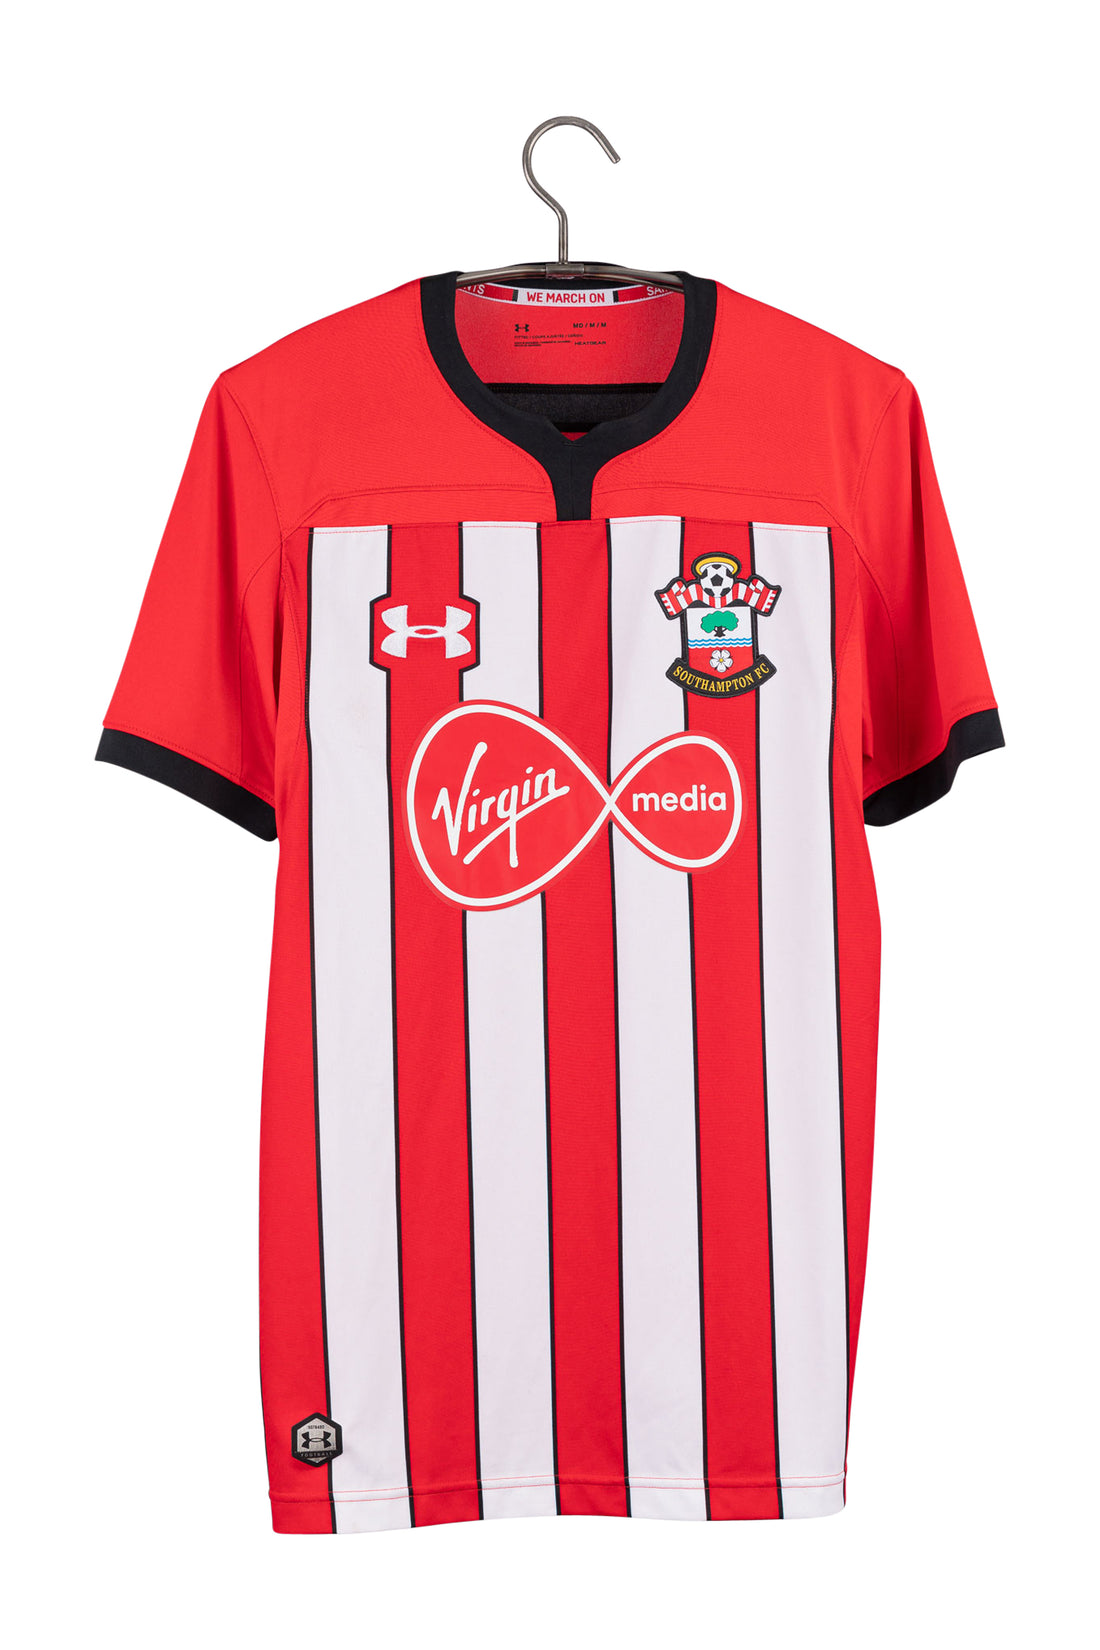 Southampton 2018 - 2019 Home Football Shirt